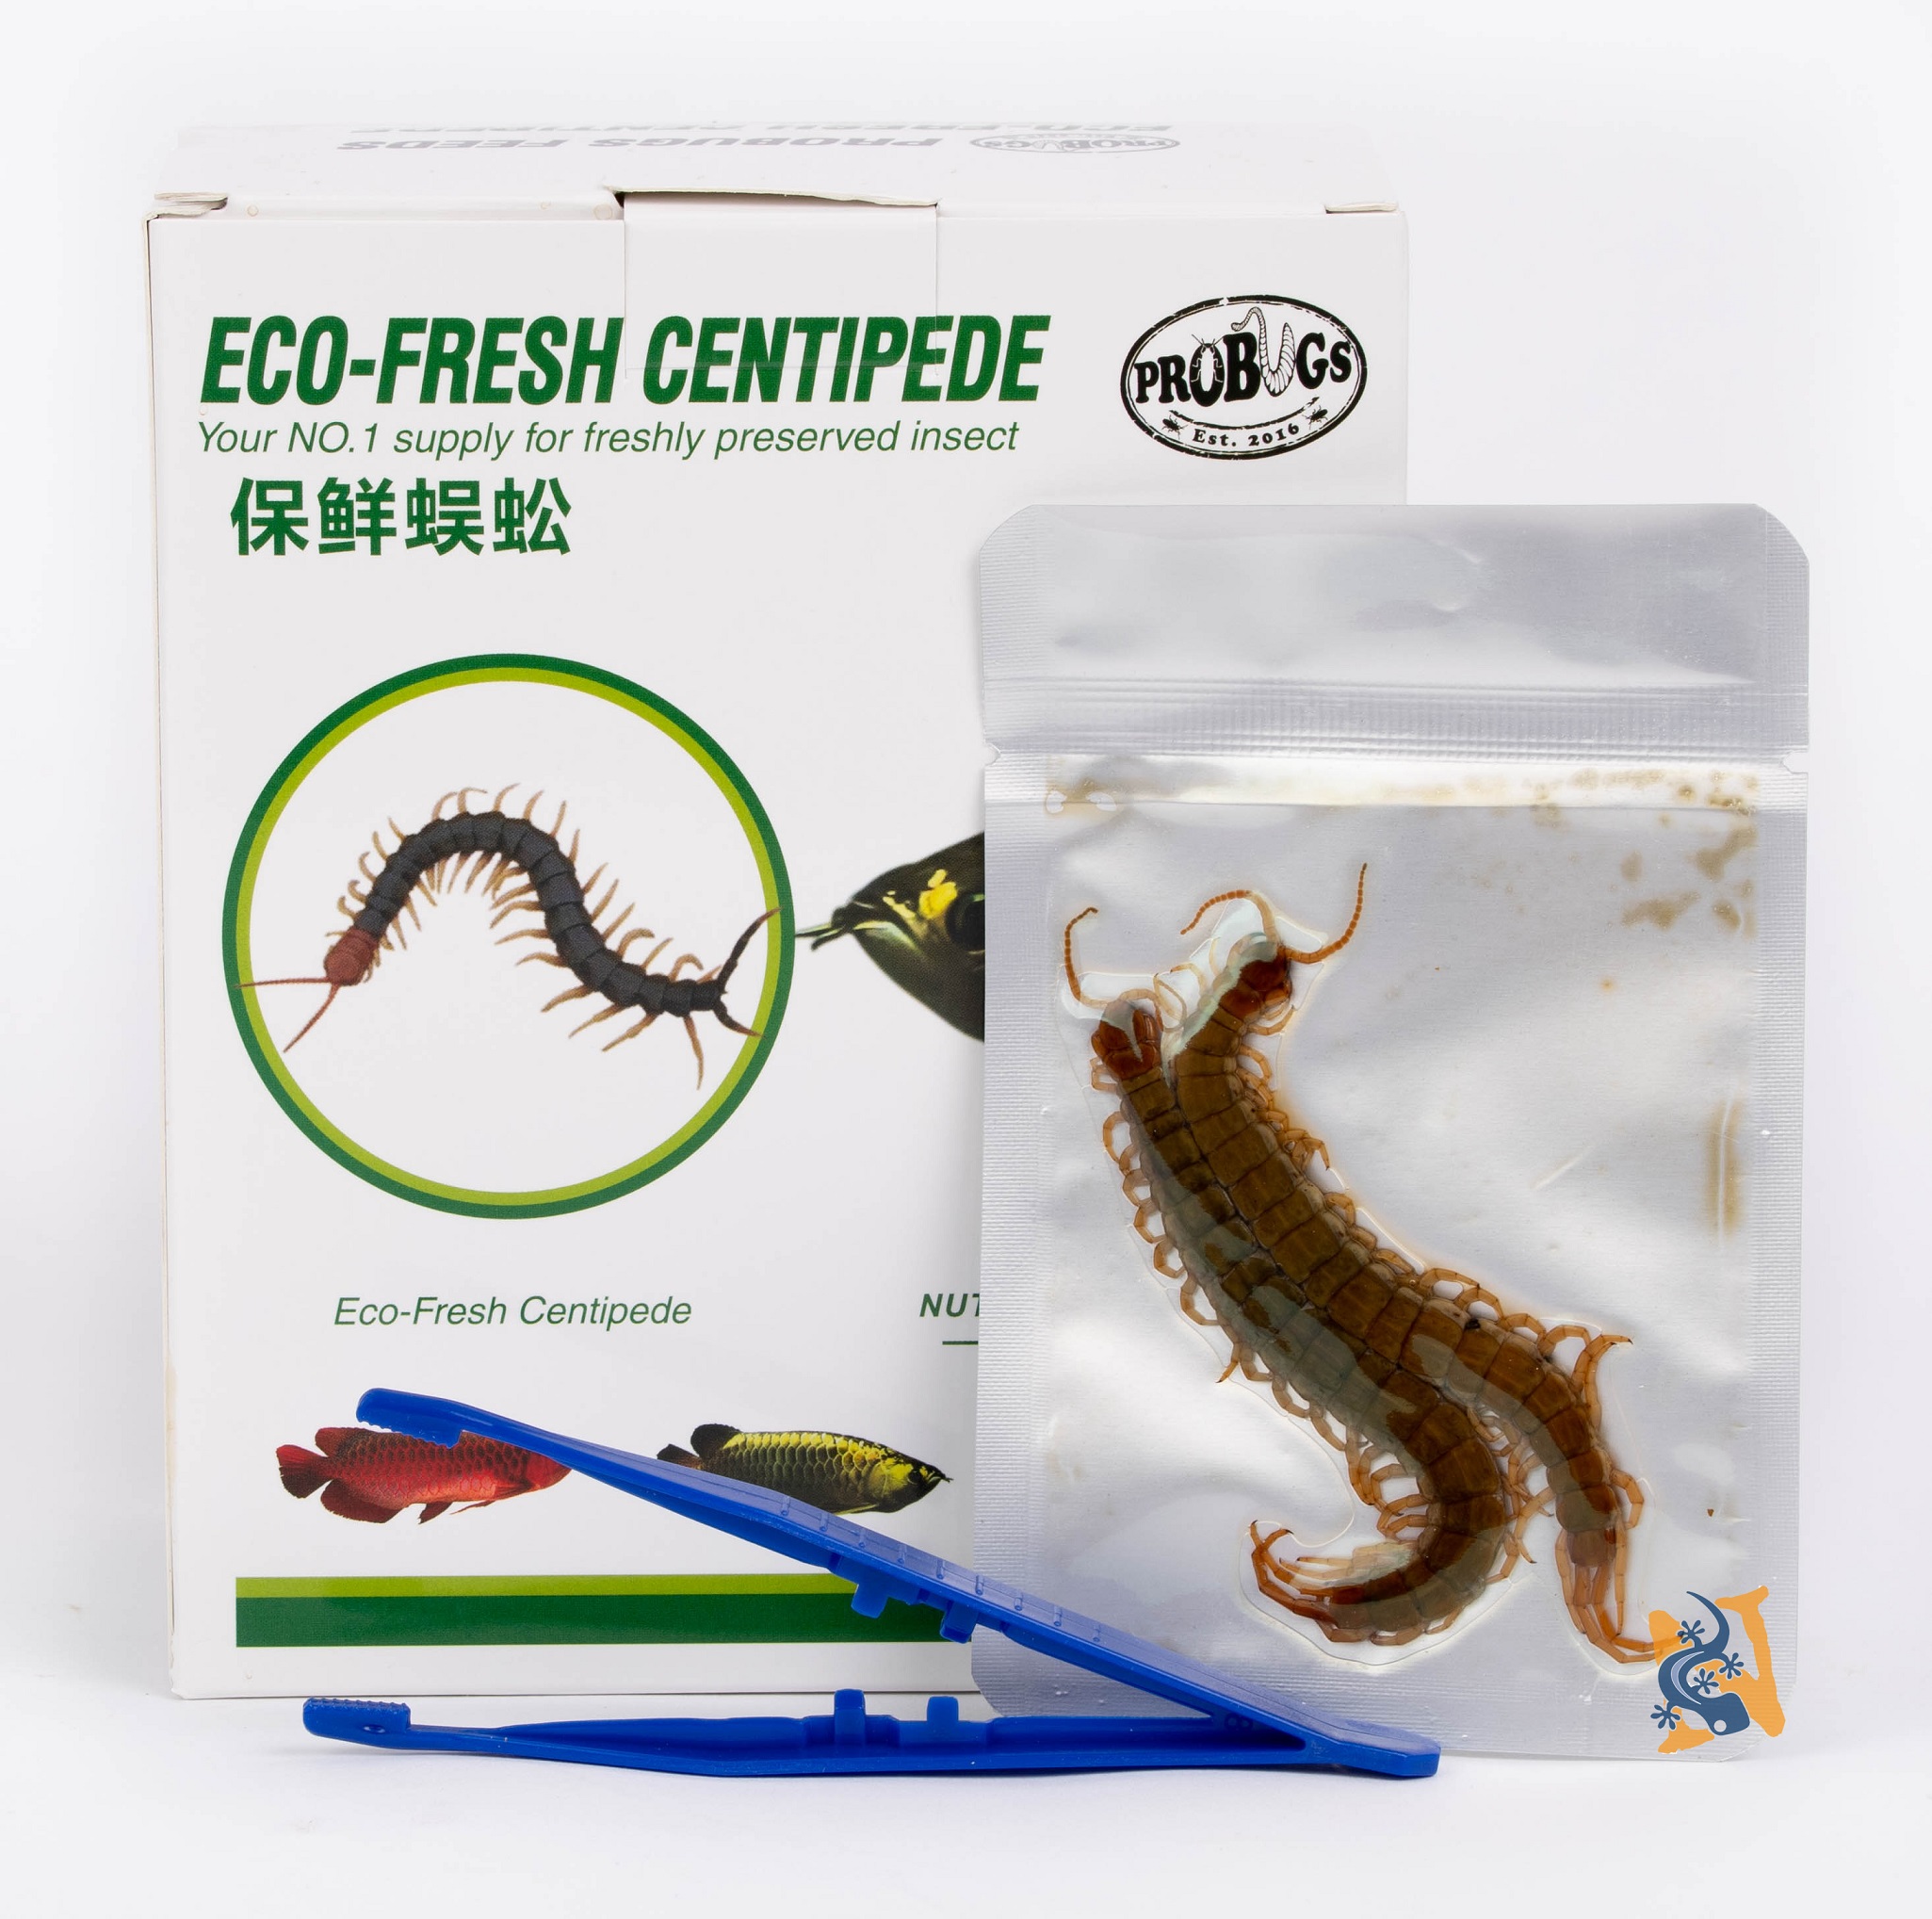 Eco-Fresh Centipede - Single pack